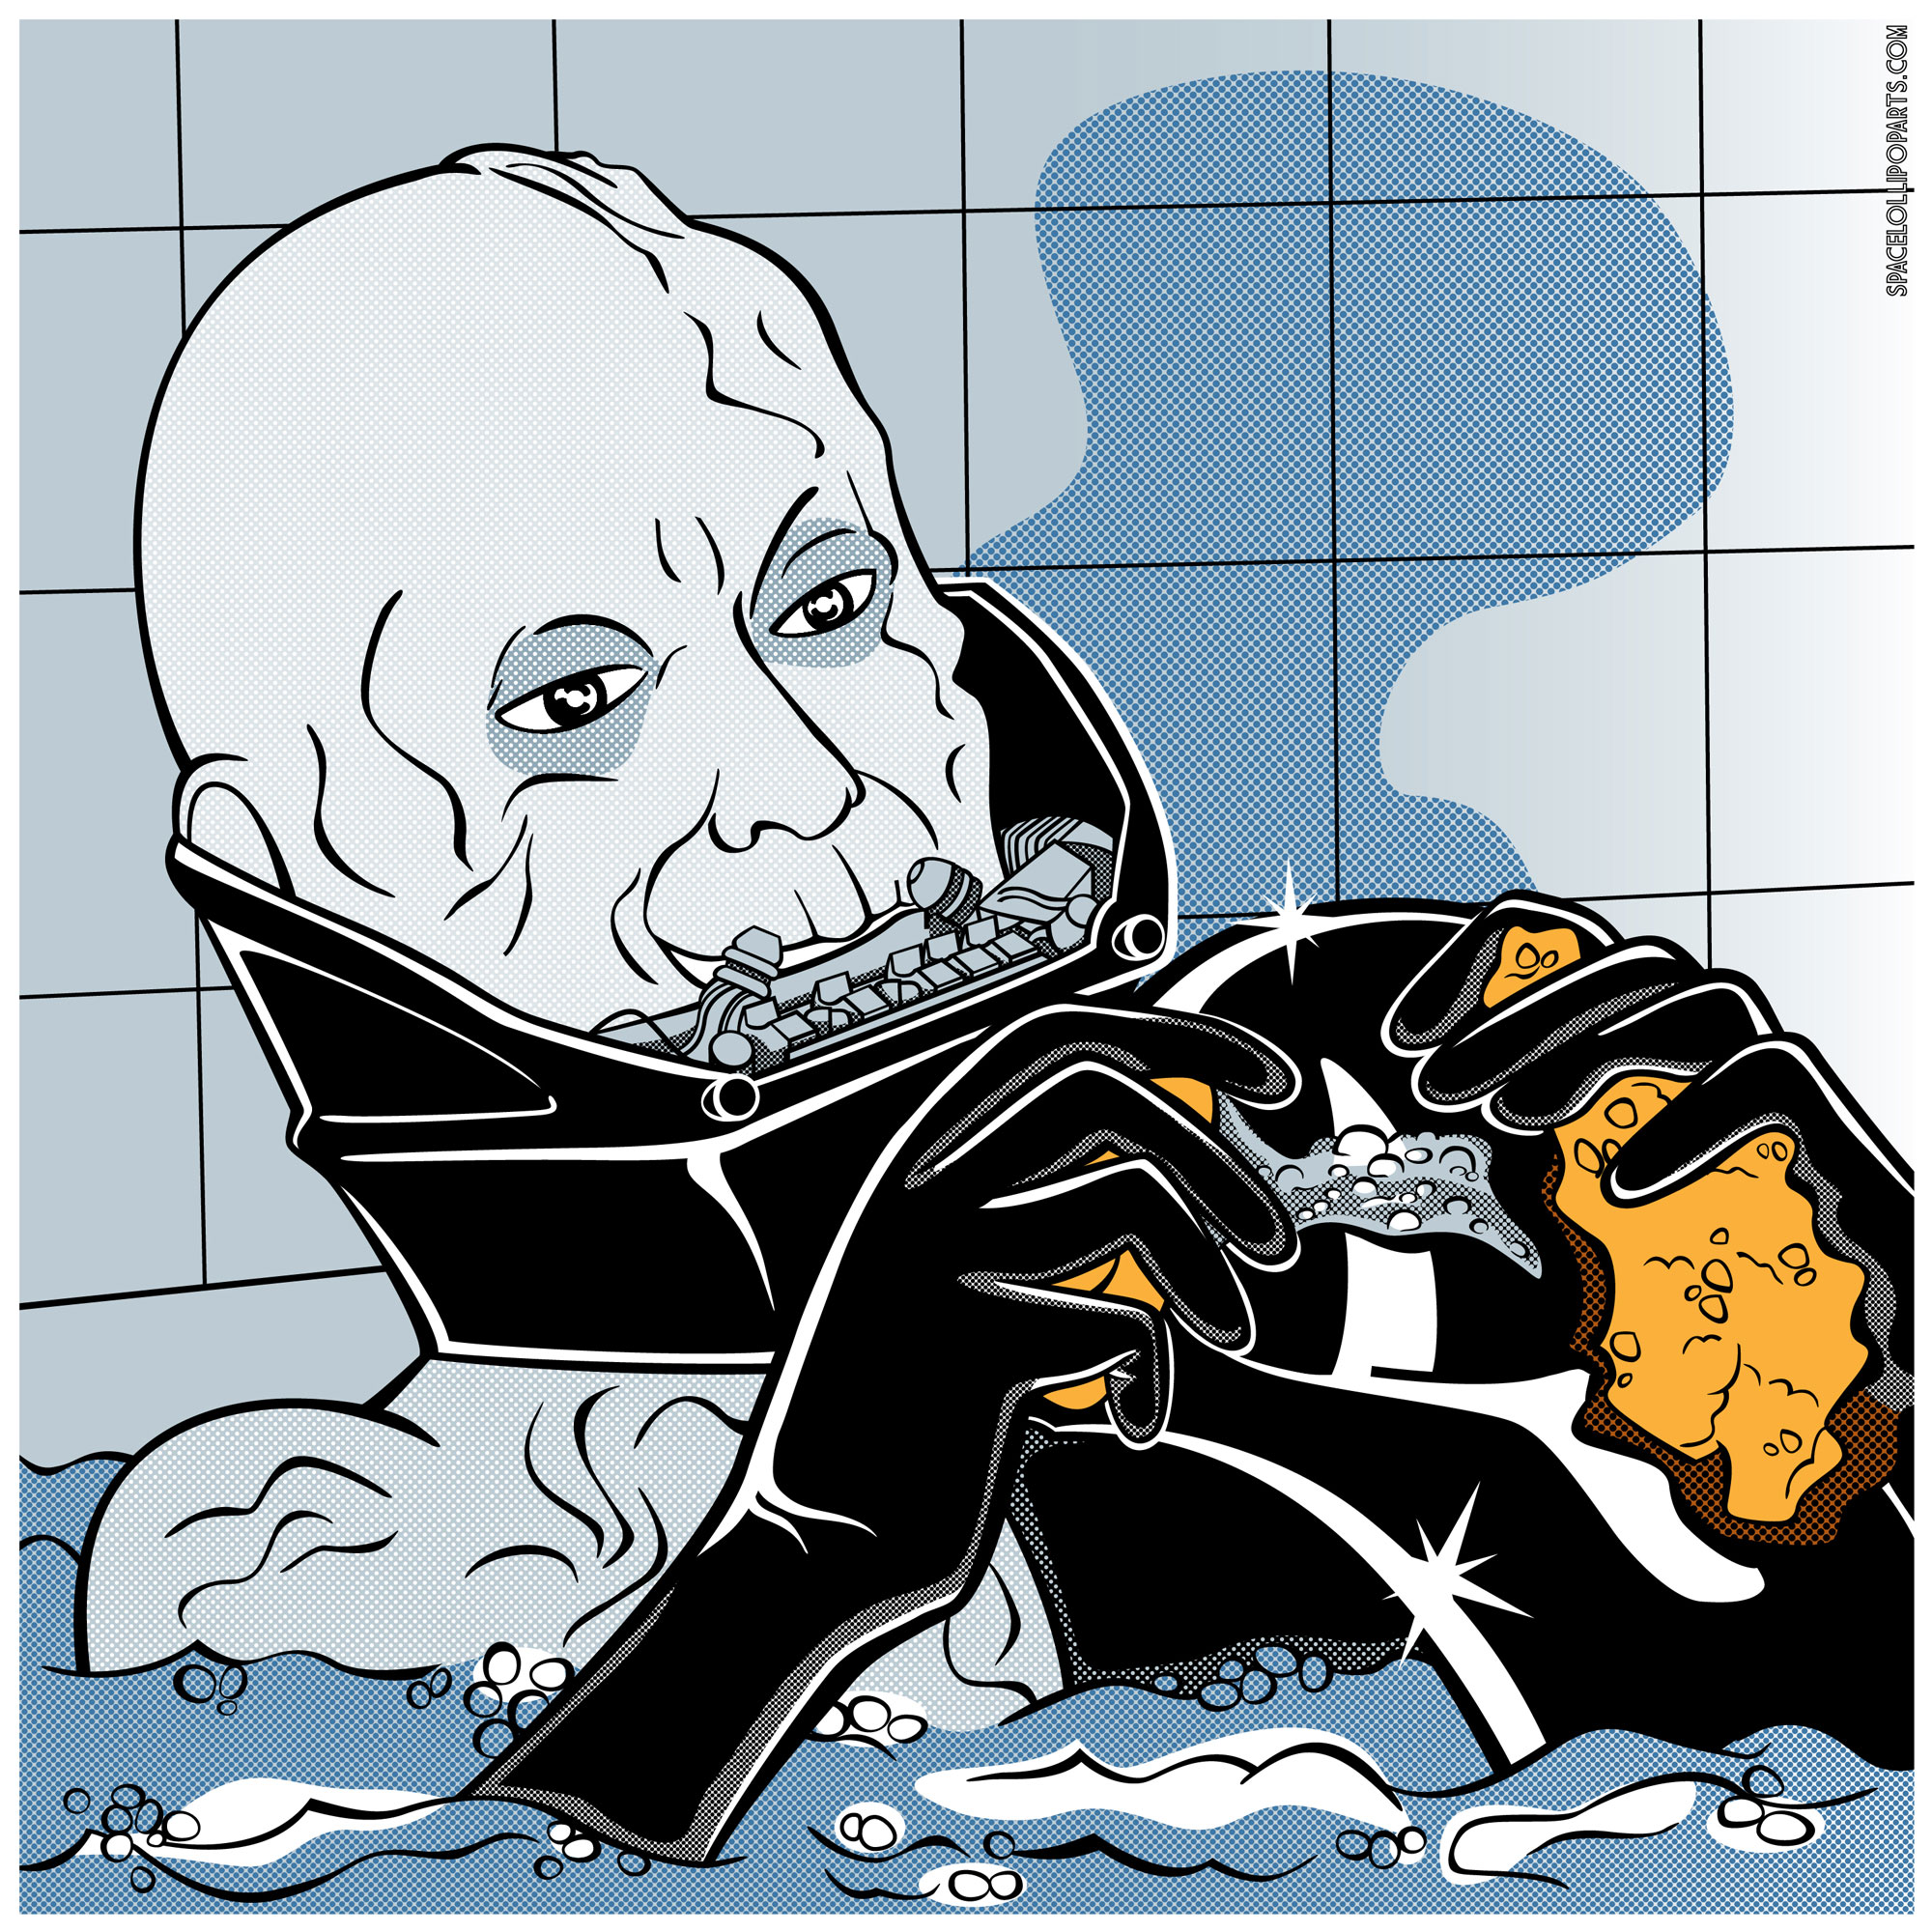 Vader taking a bath